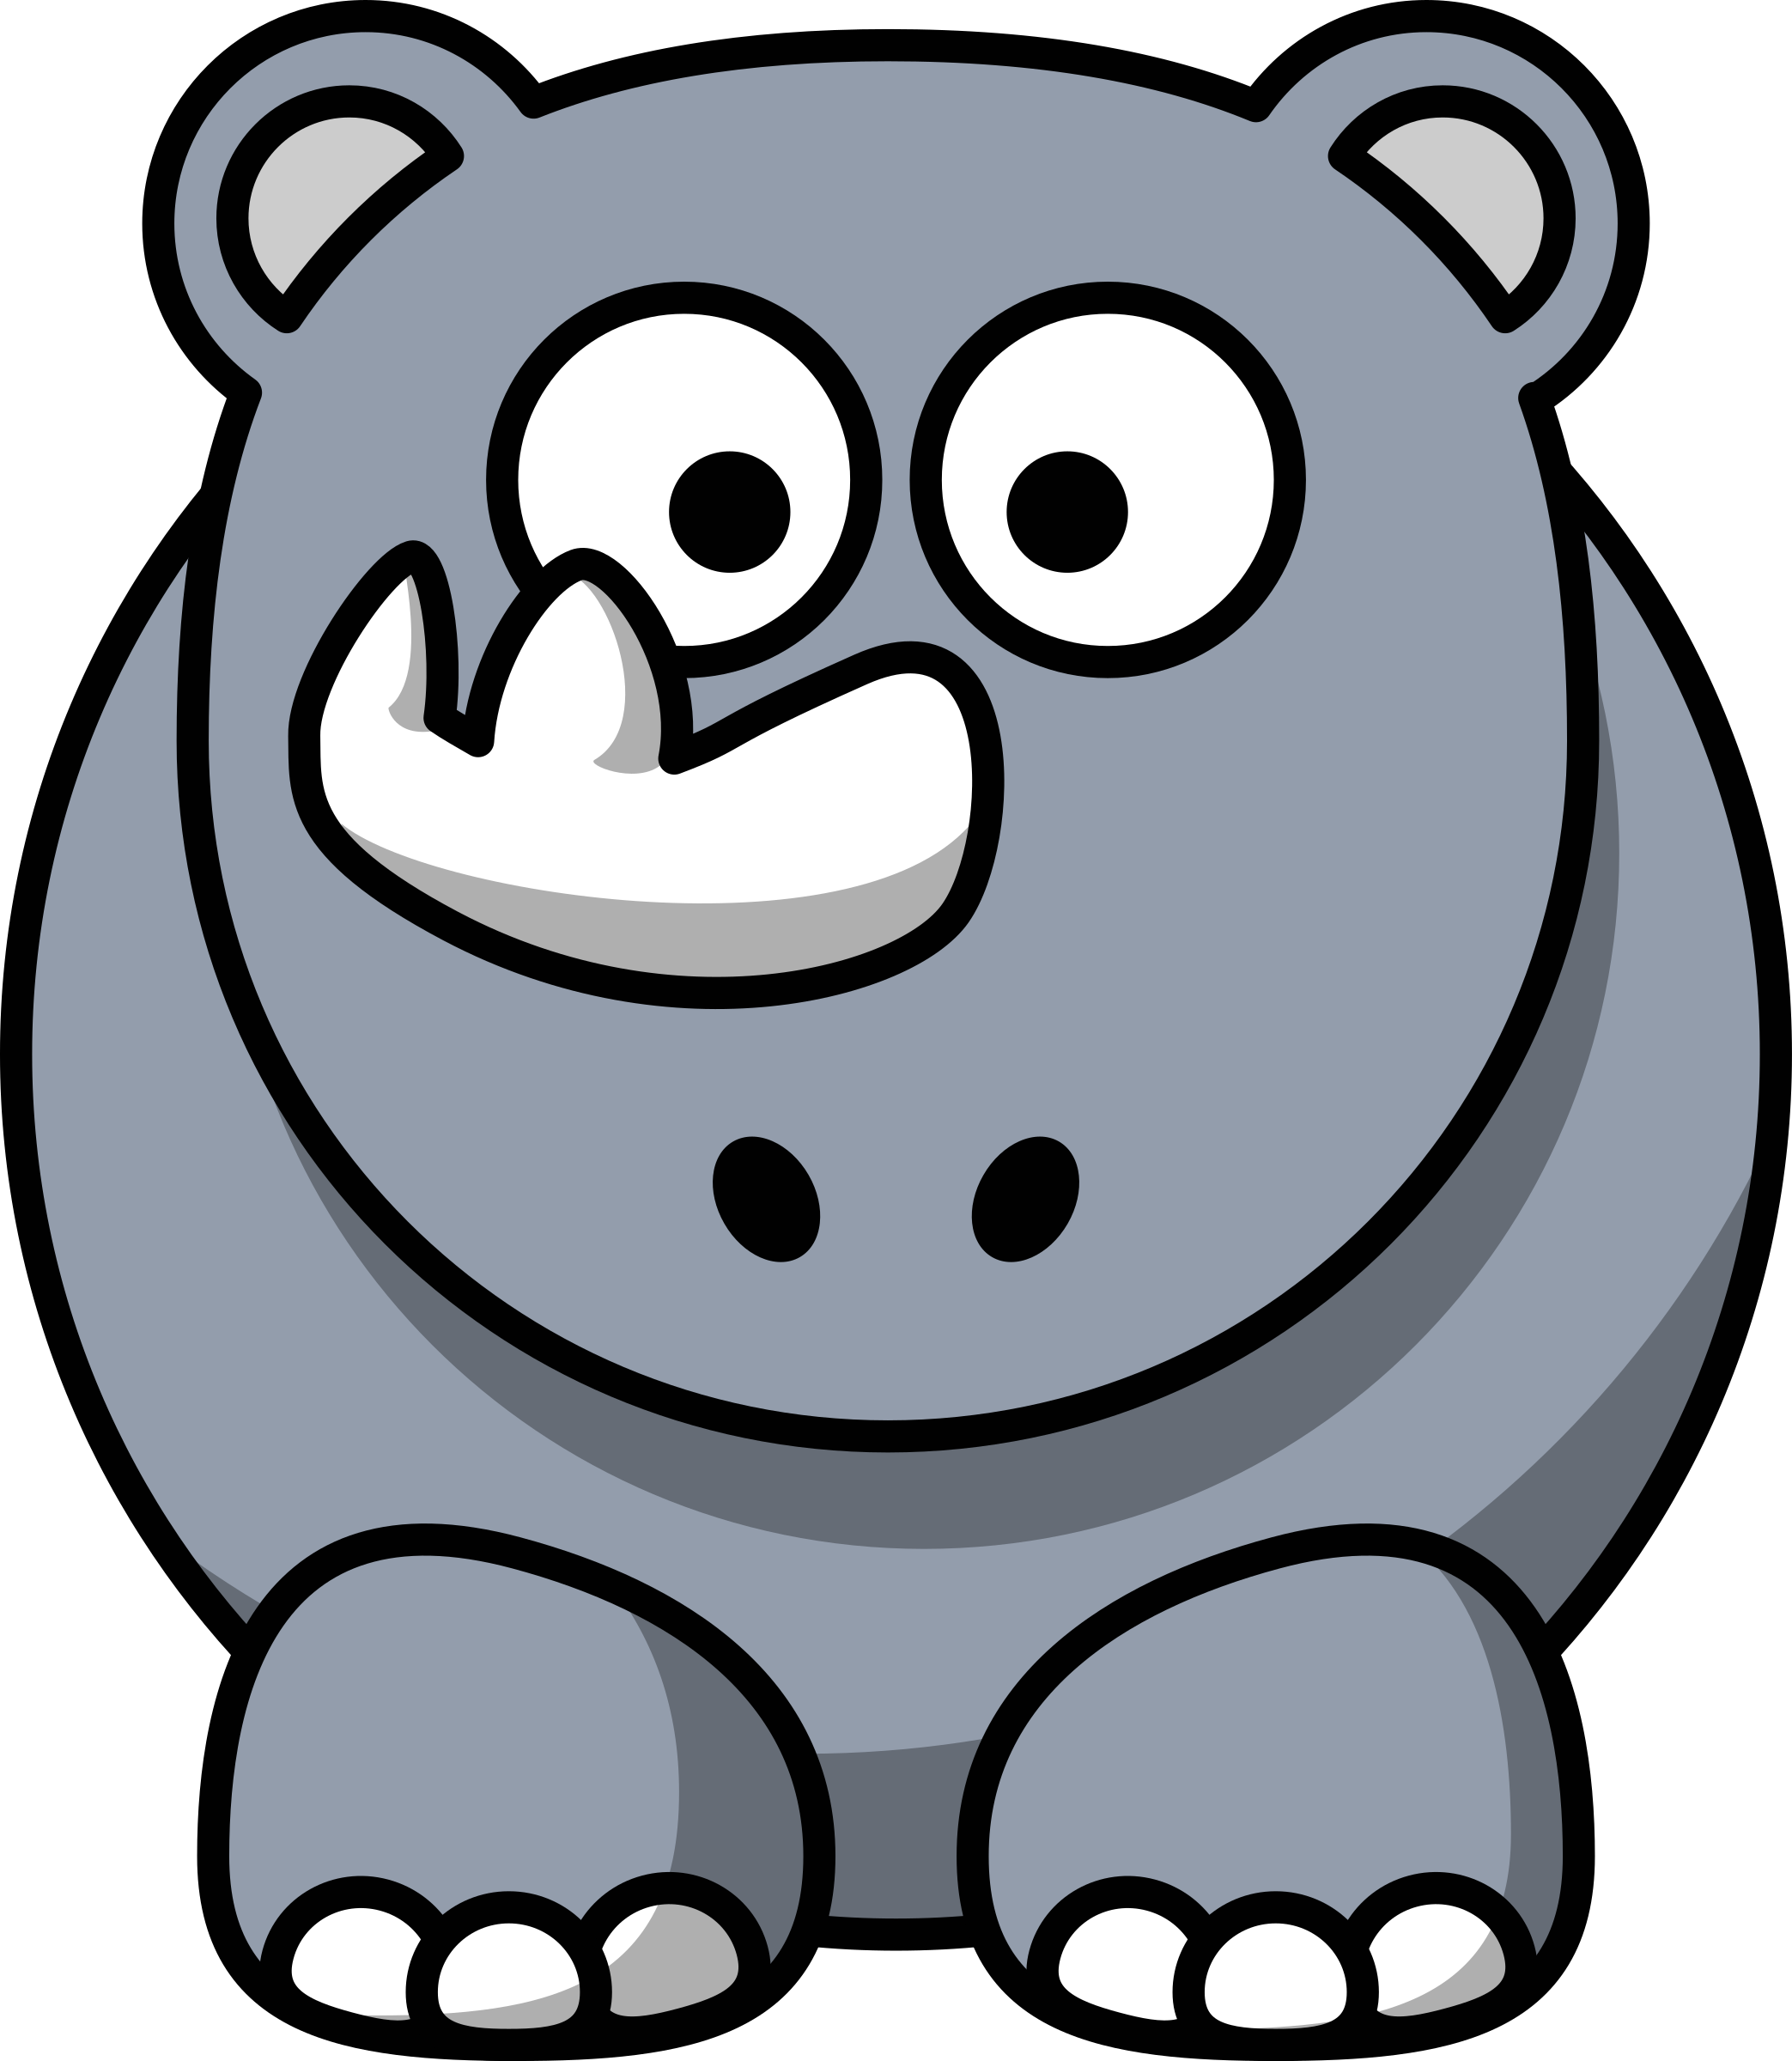 Clipart - Cartoon rhino